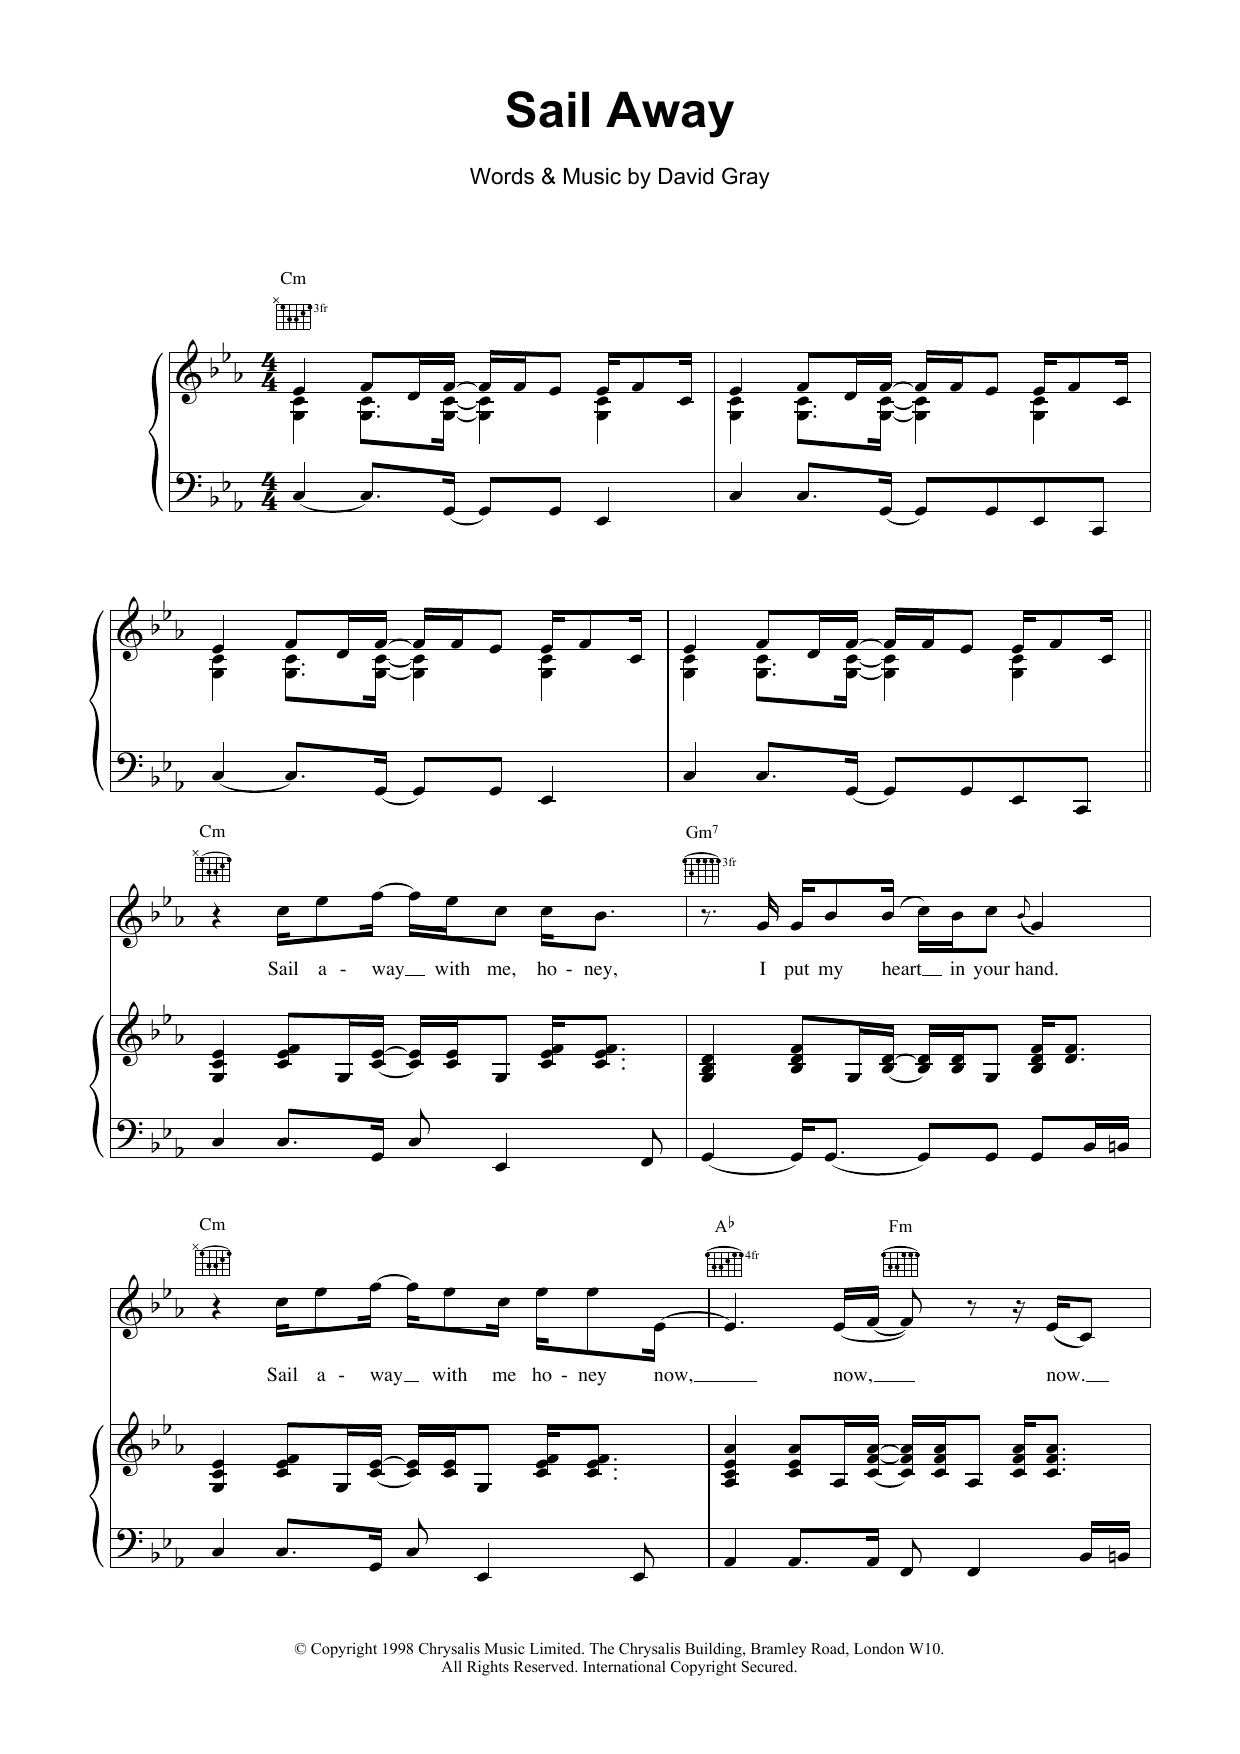 David Gray Sail Away Sheet Music Notes & Chords for Piano, Vocal & Guitar - Download or Print PDF